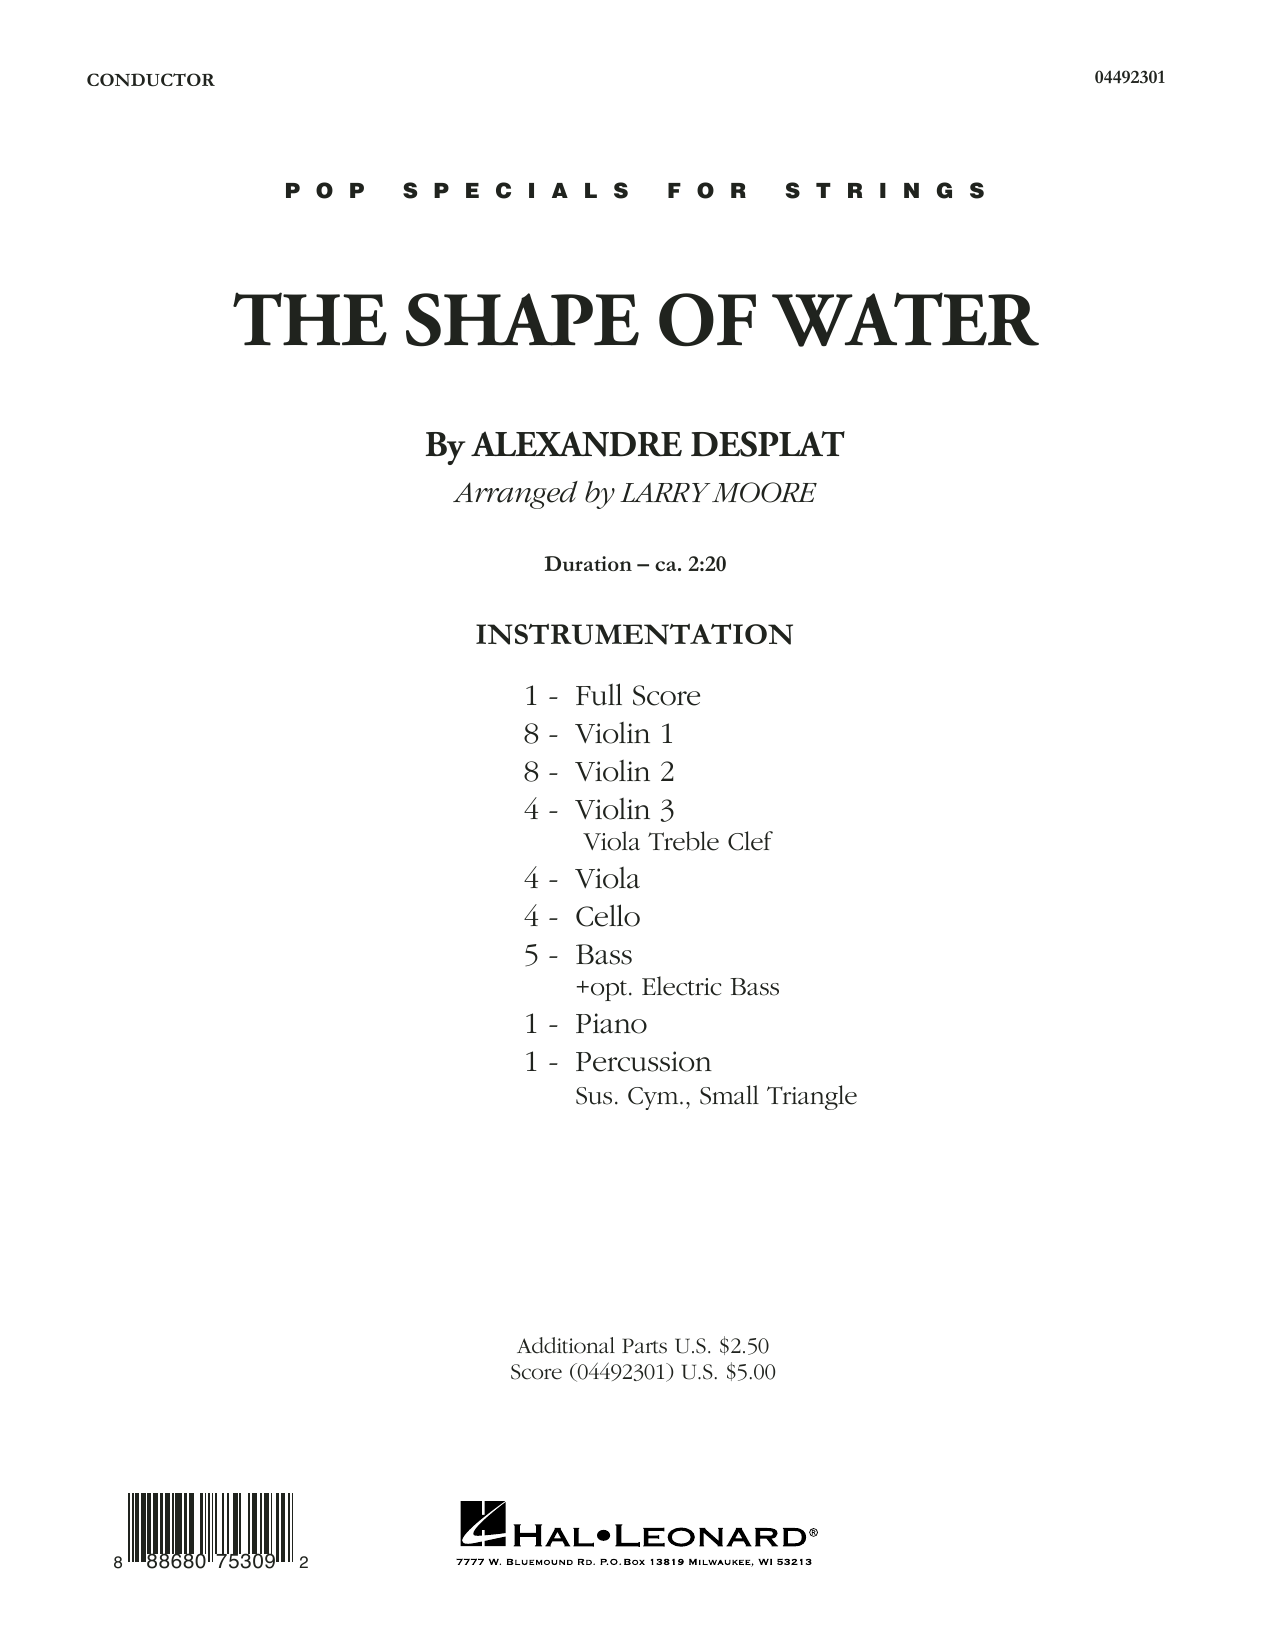 Download Alexandre Desplat The Shape of Water (arr. Larry Moore) - Sheet Music